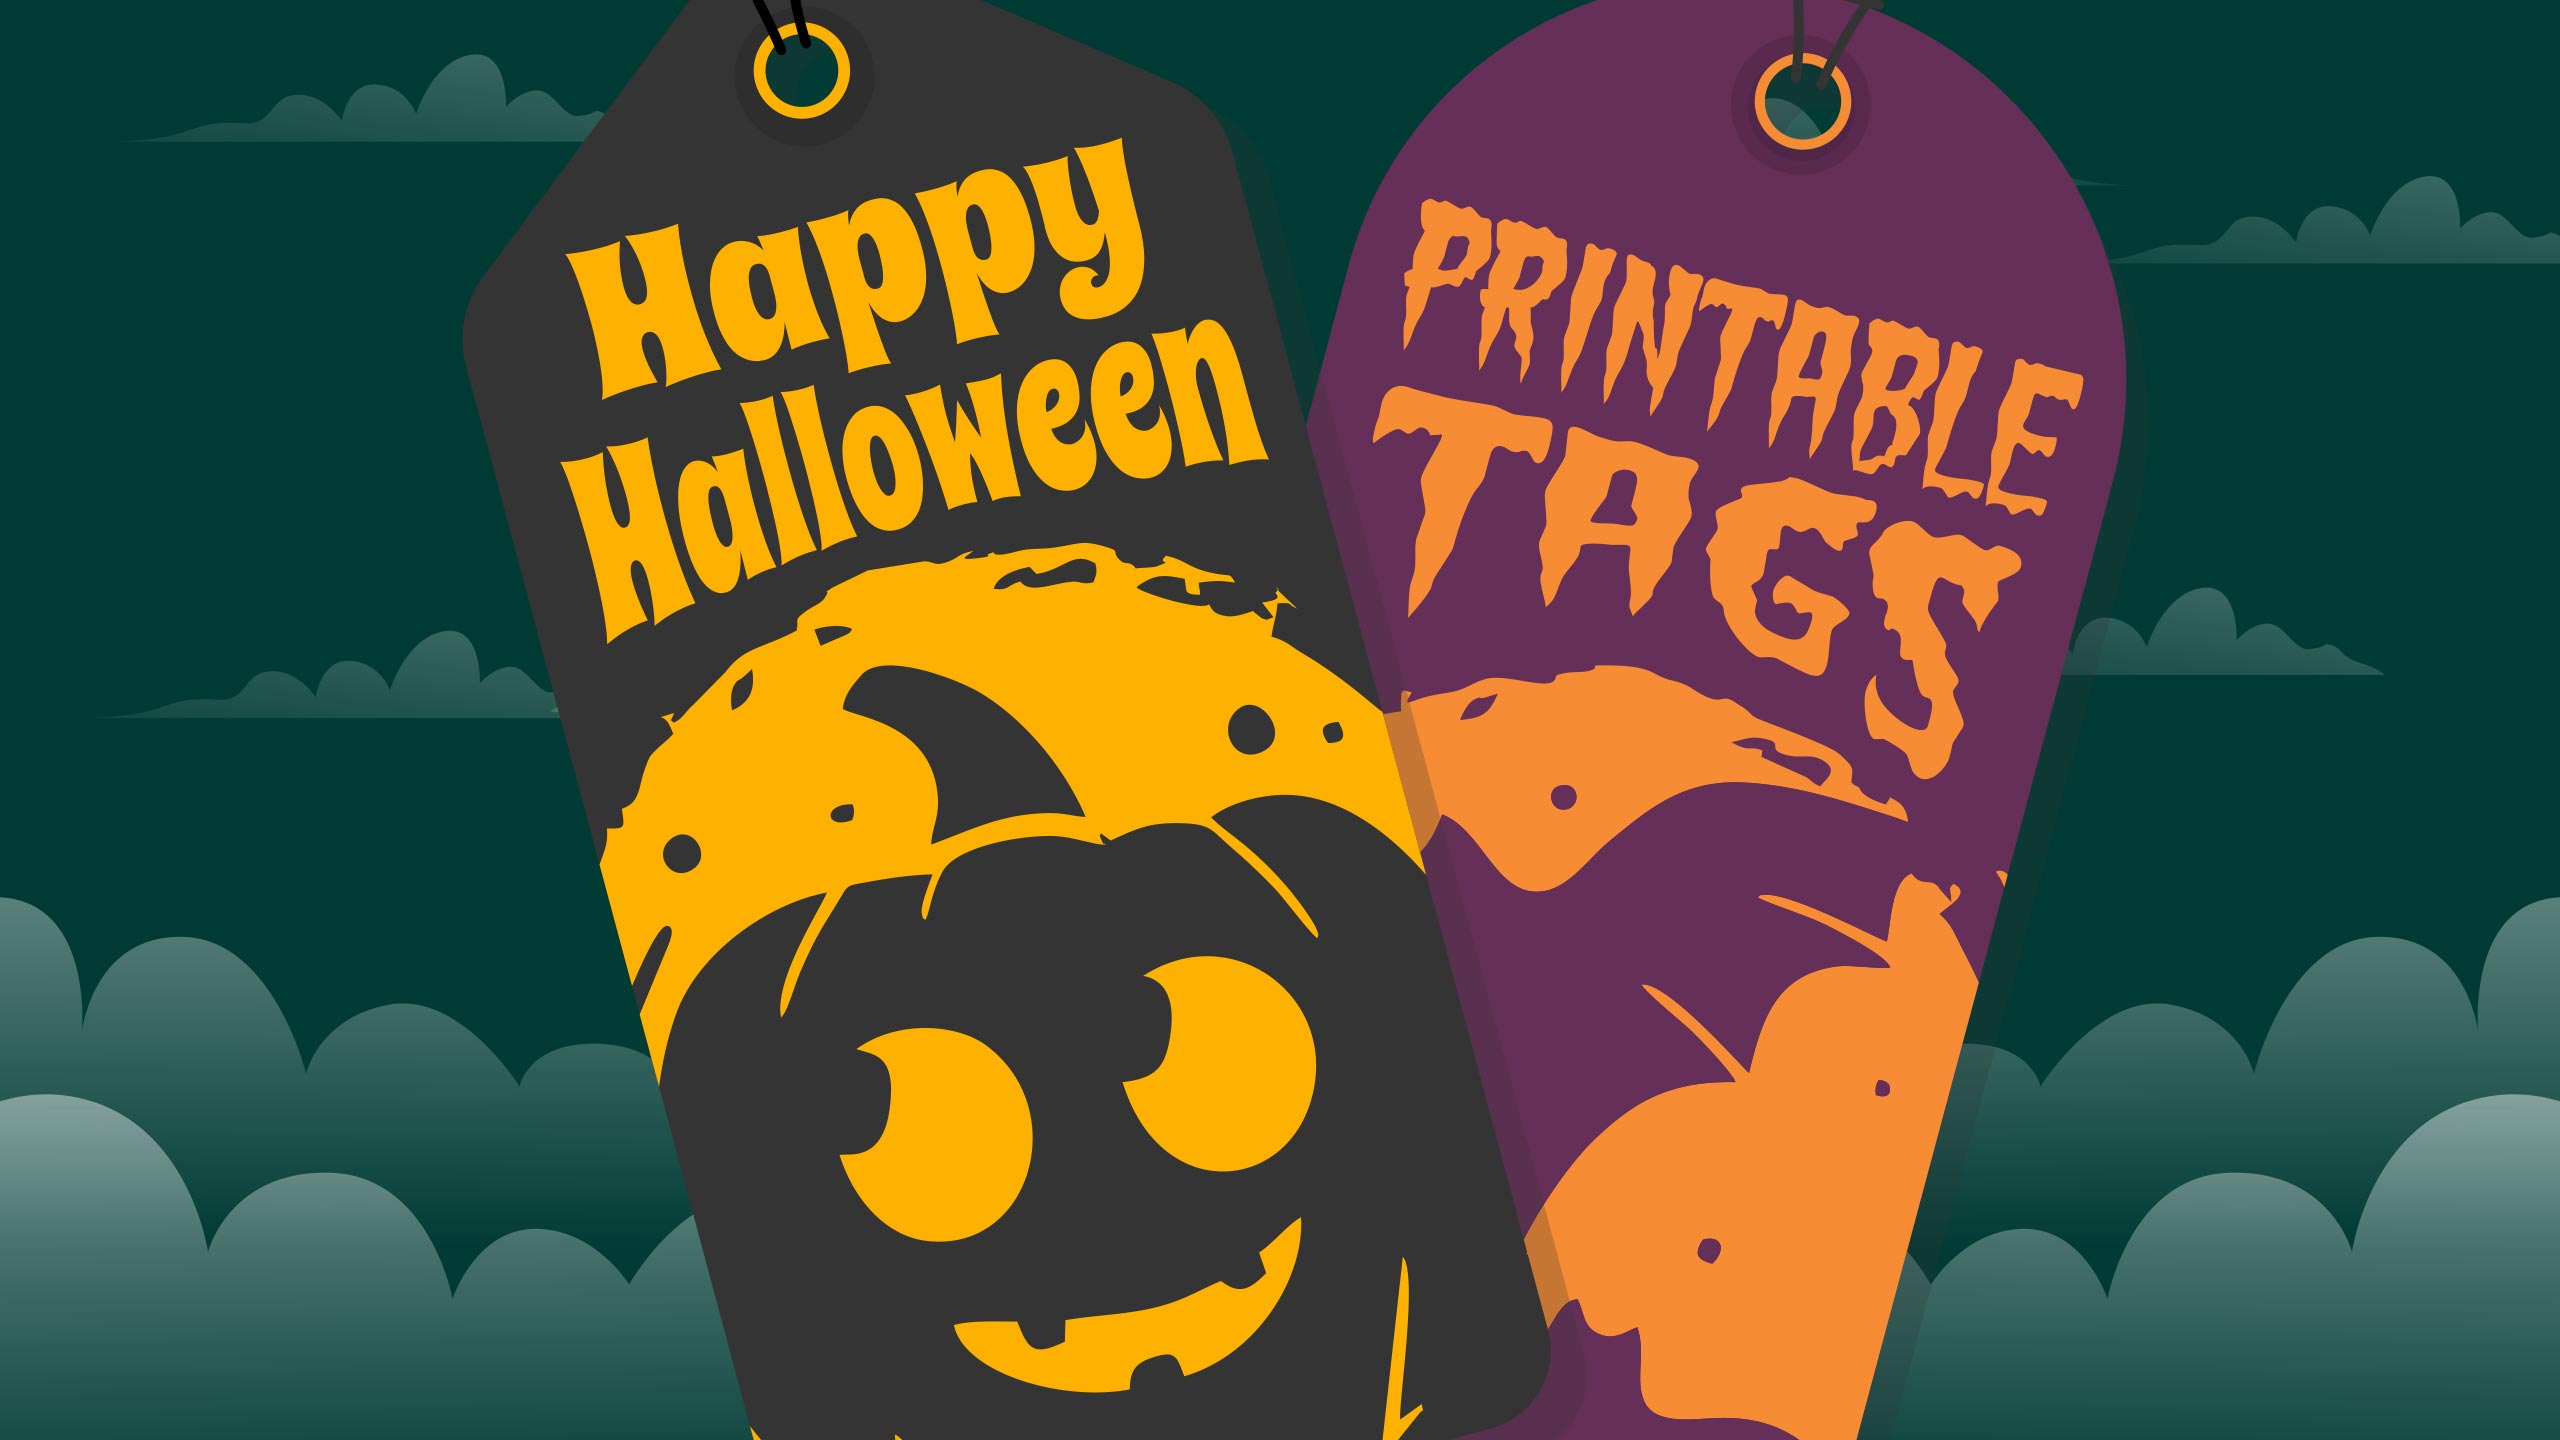 Happy Halloween Printable Tags